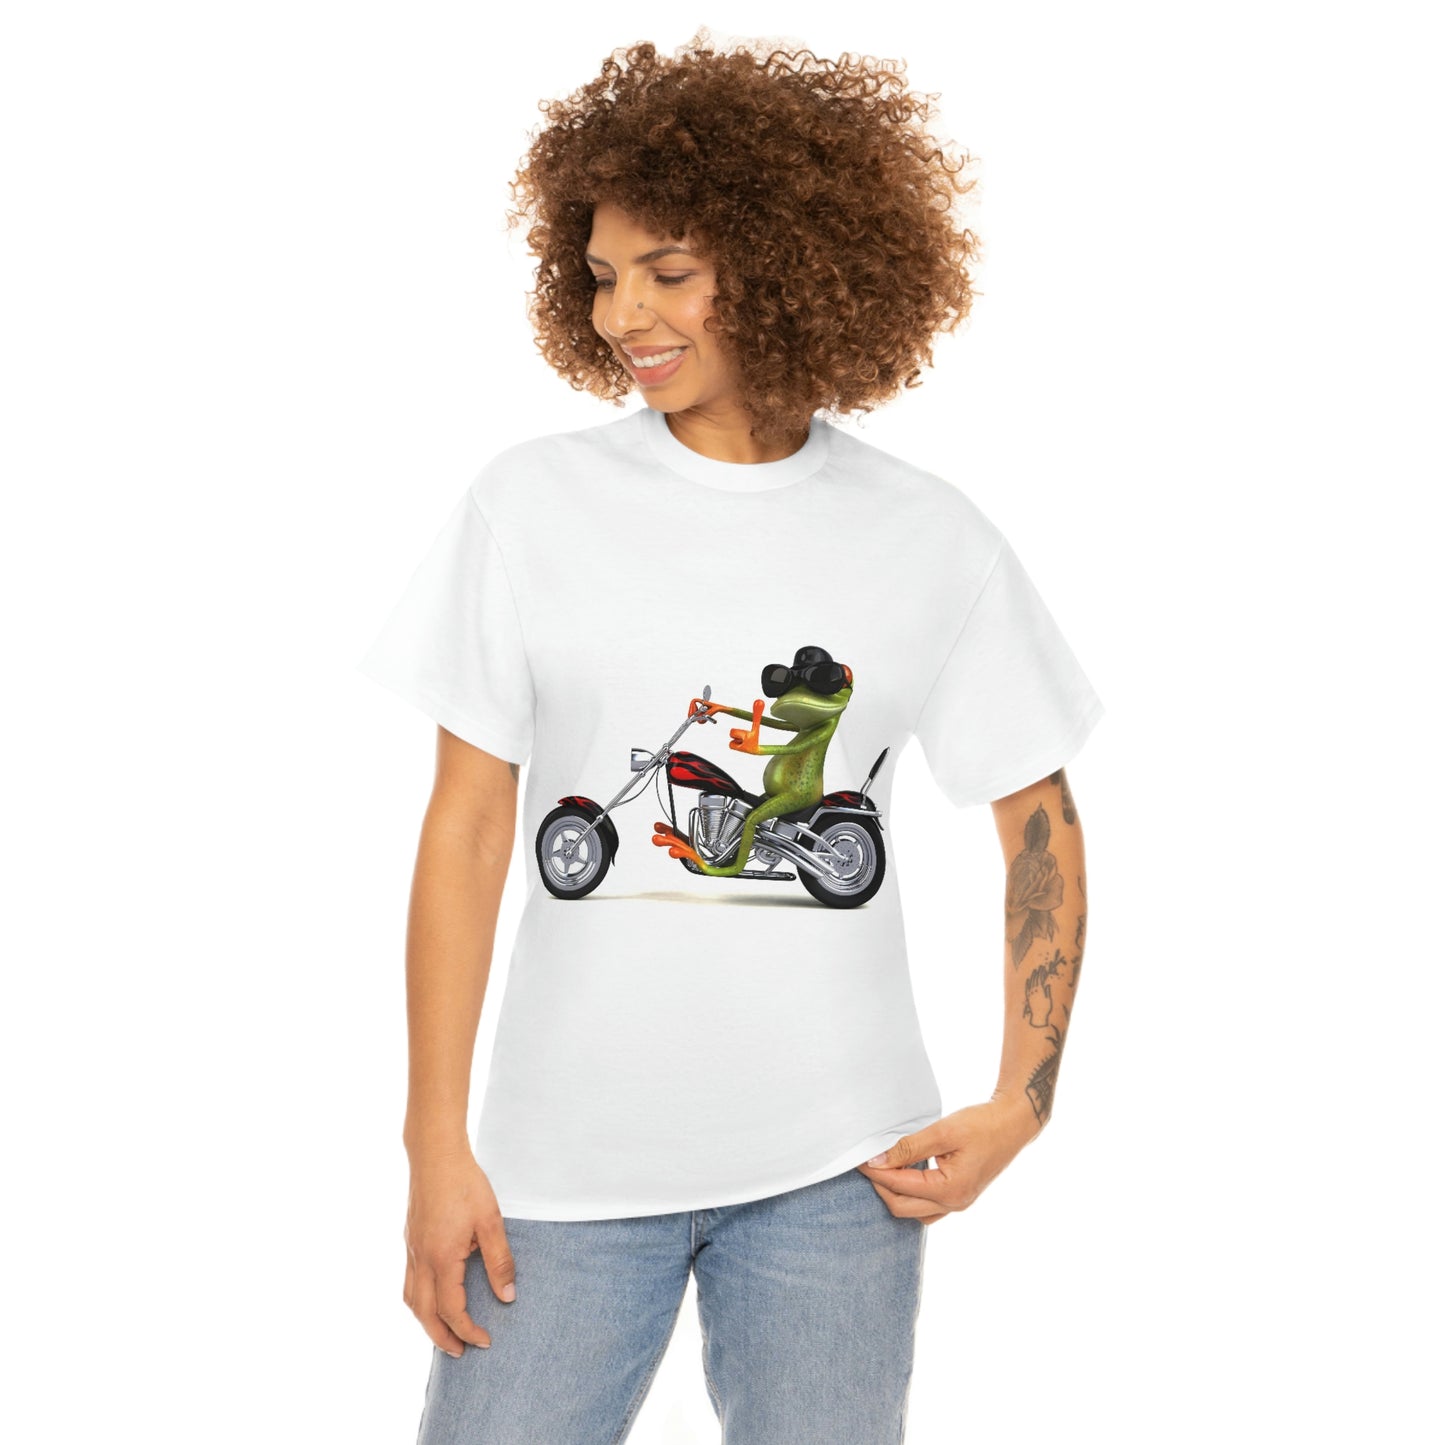 A Comfortable Tee  Frog on Bike T-shirt - Men's Penny Farthing shirt - Animal Tshirt - Motorcycle Bike - Bike Frog Shirt - Animal Shirt - Bike Shirt - Frog Tshirt